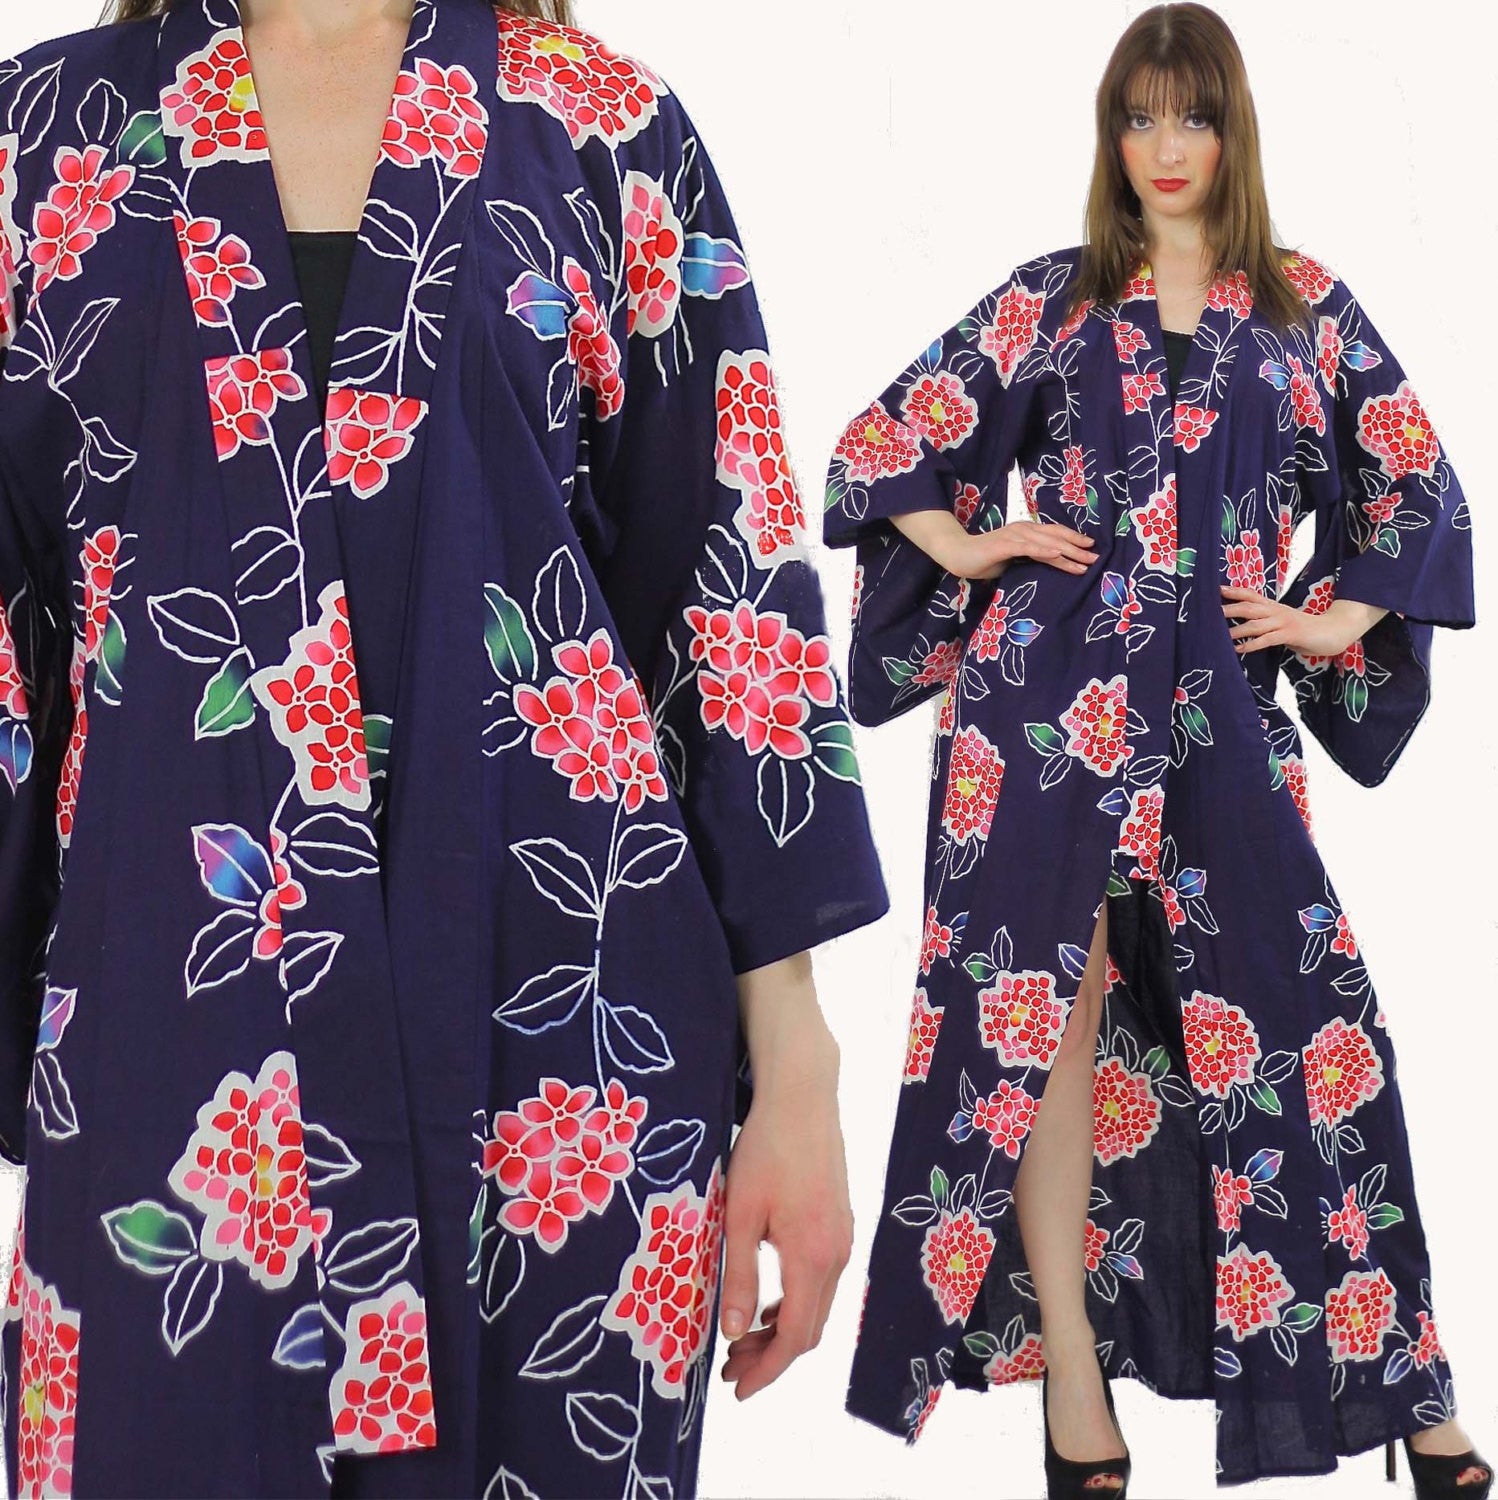 70s kimono dress